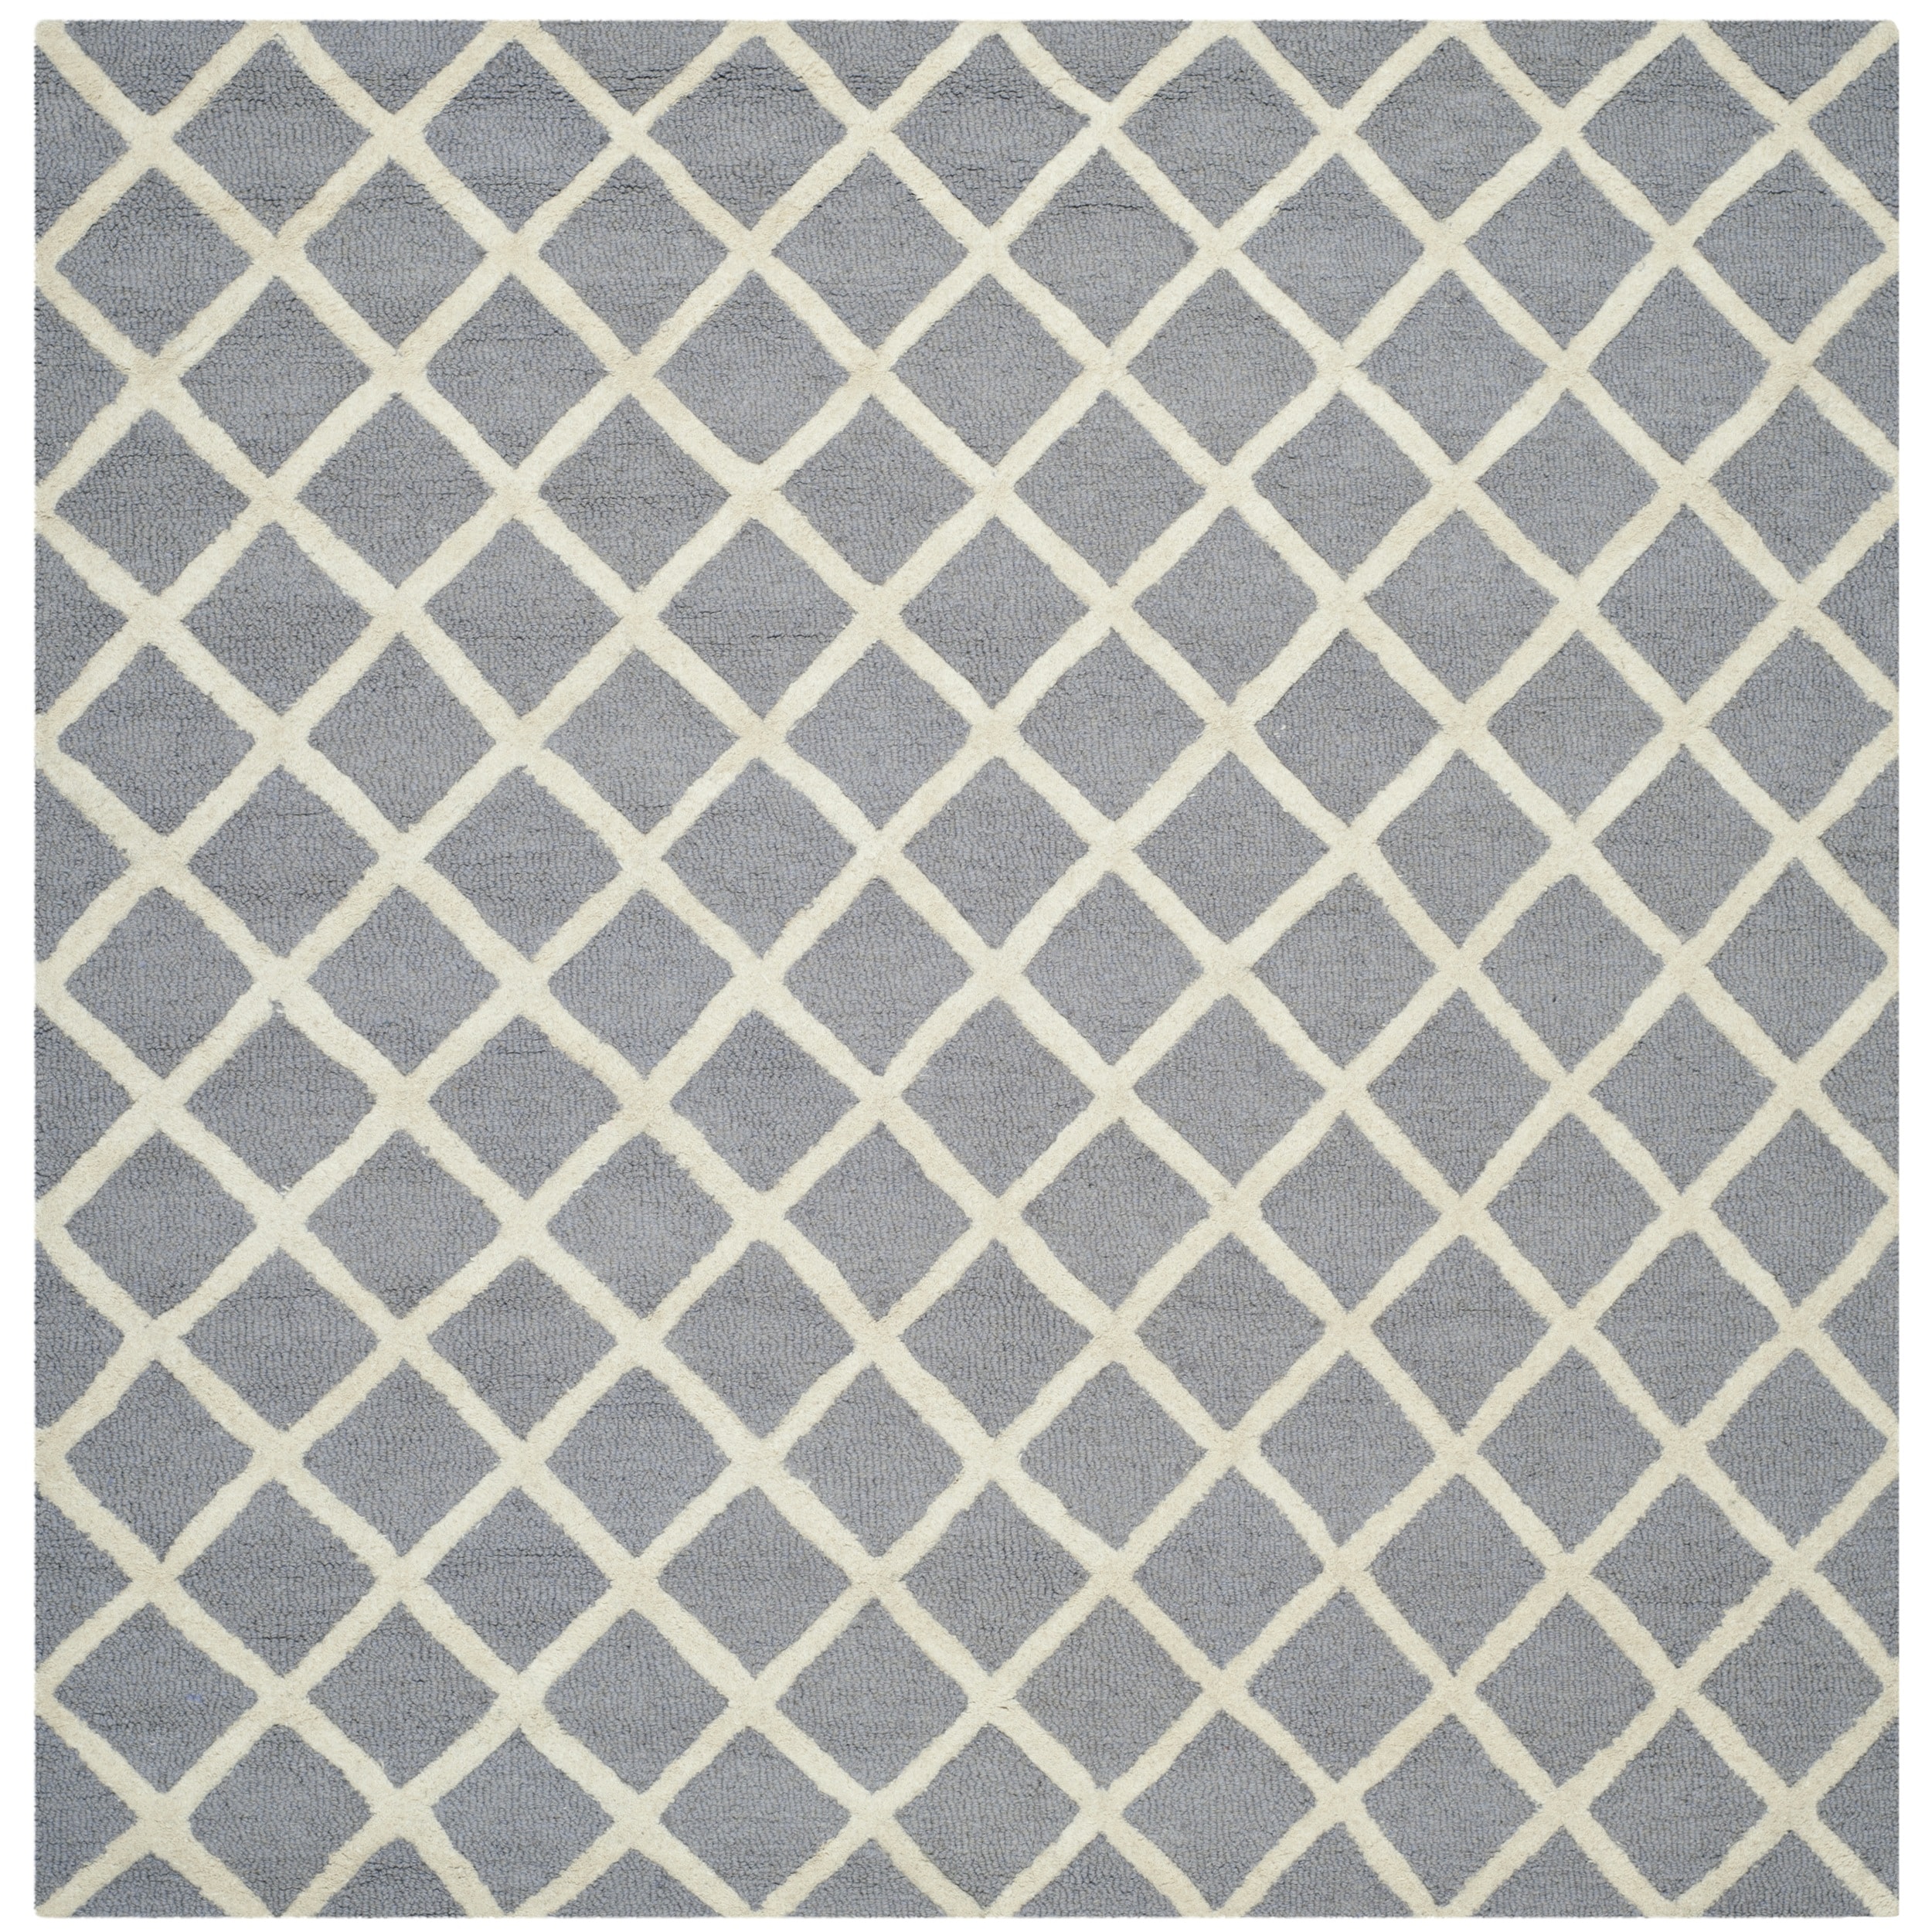 Safavieh Handmade Cambridge Moroccan Silver Small square pattern Wool Rug (6 Square)